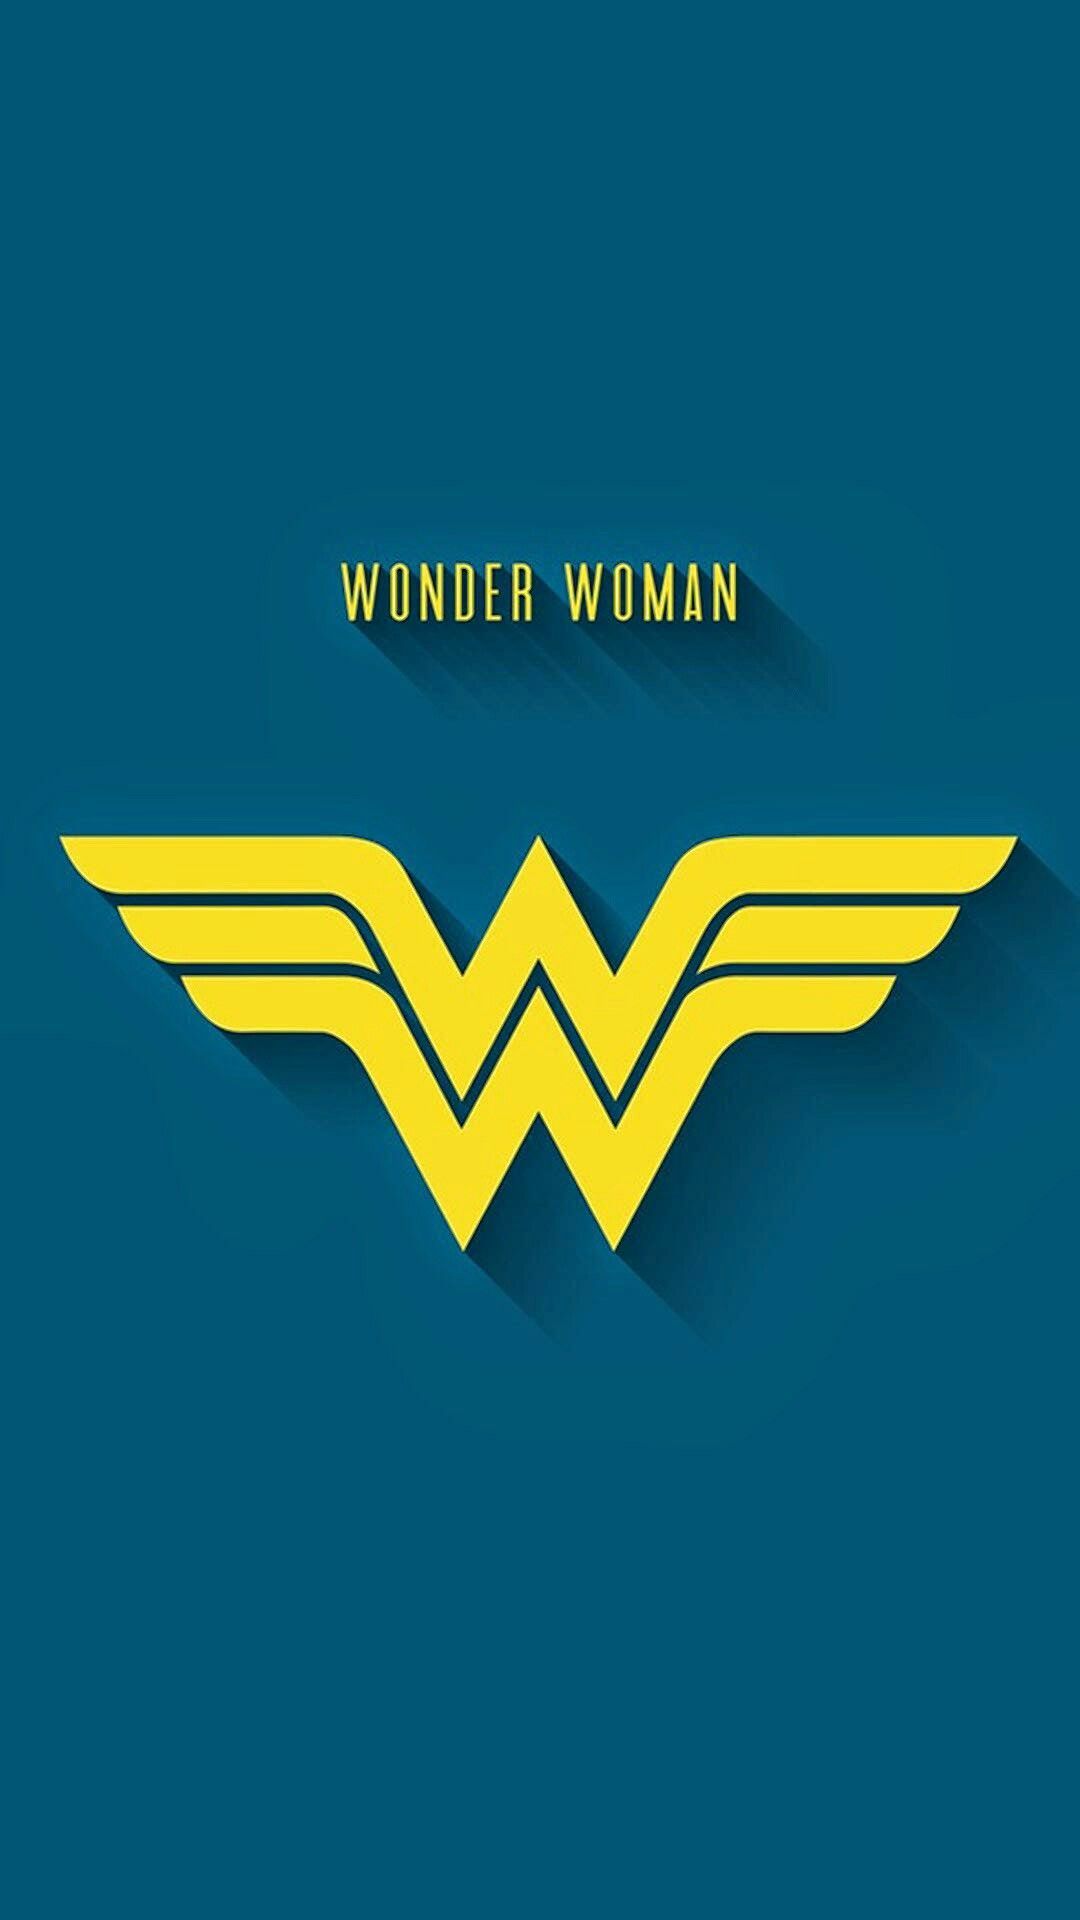 Wonder Woman Wallpaper. Superhero wallpaper, Wonder woman, Comics logo